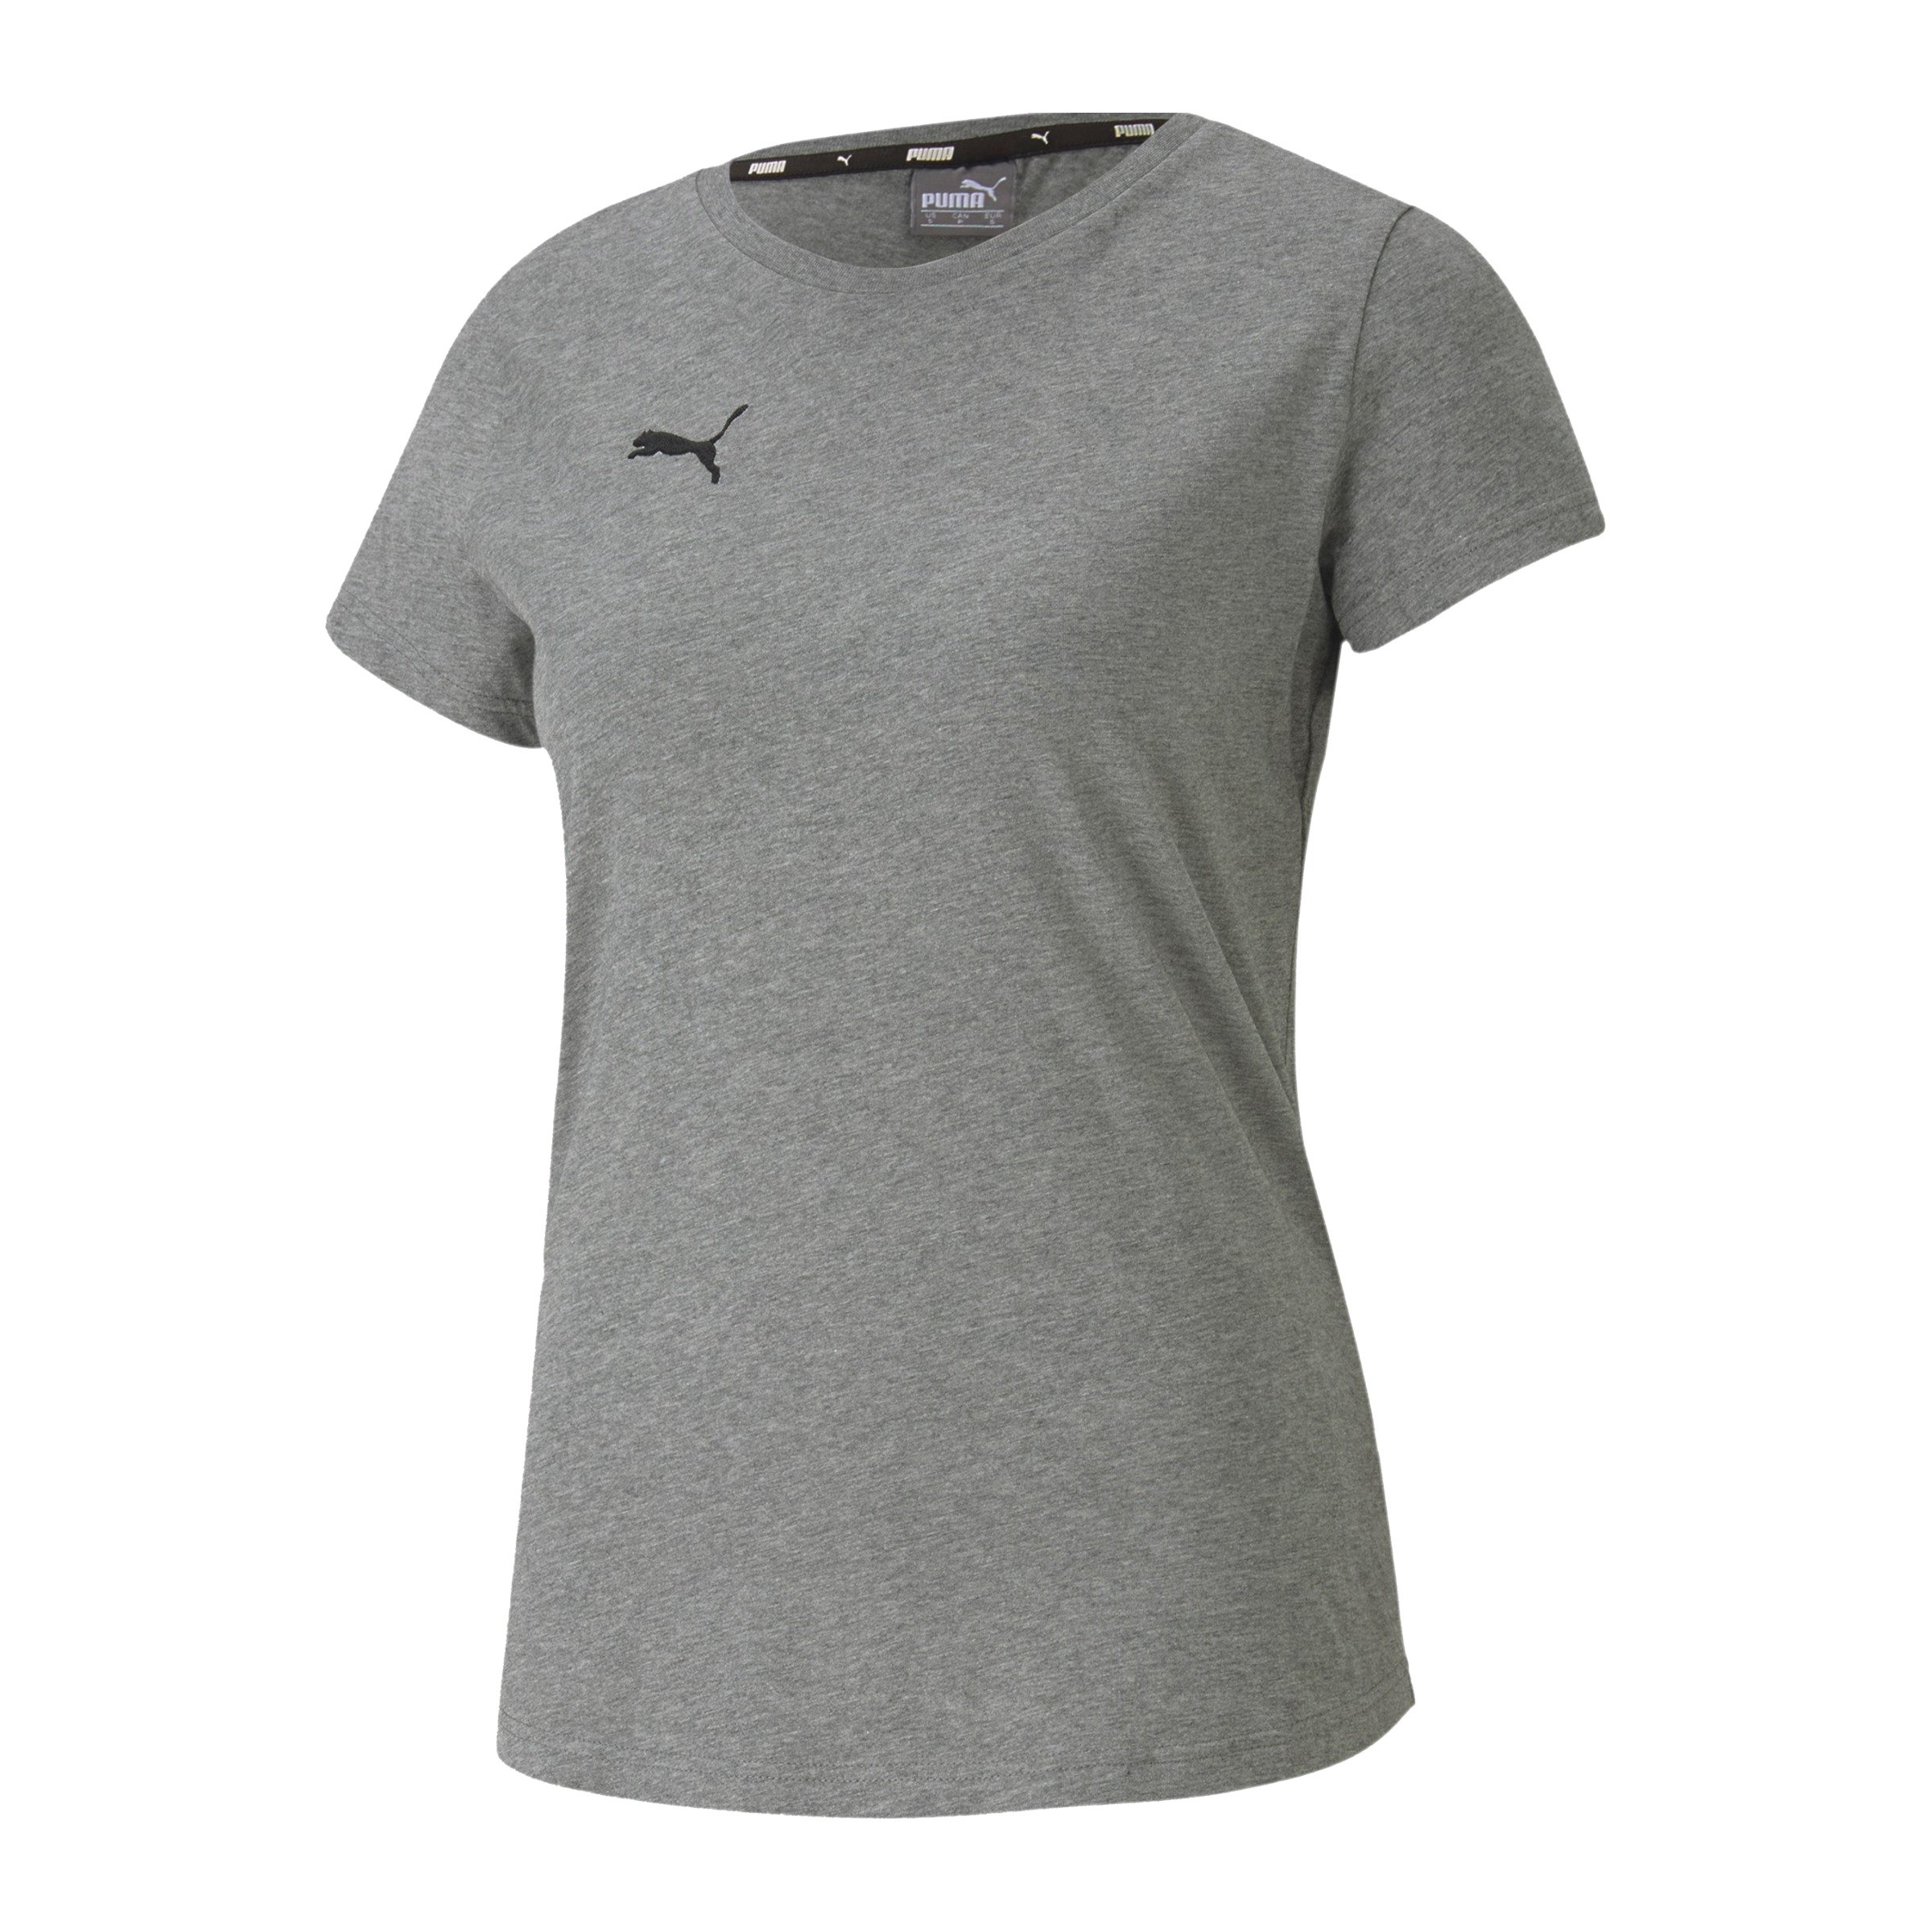 PUMA teamGOAL T-Shirt Damen Grau Casuals F33 grau 23